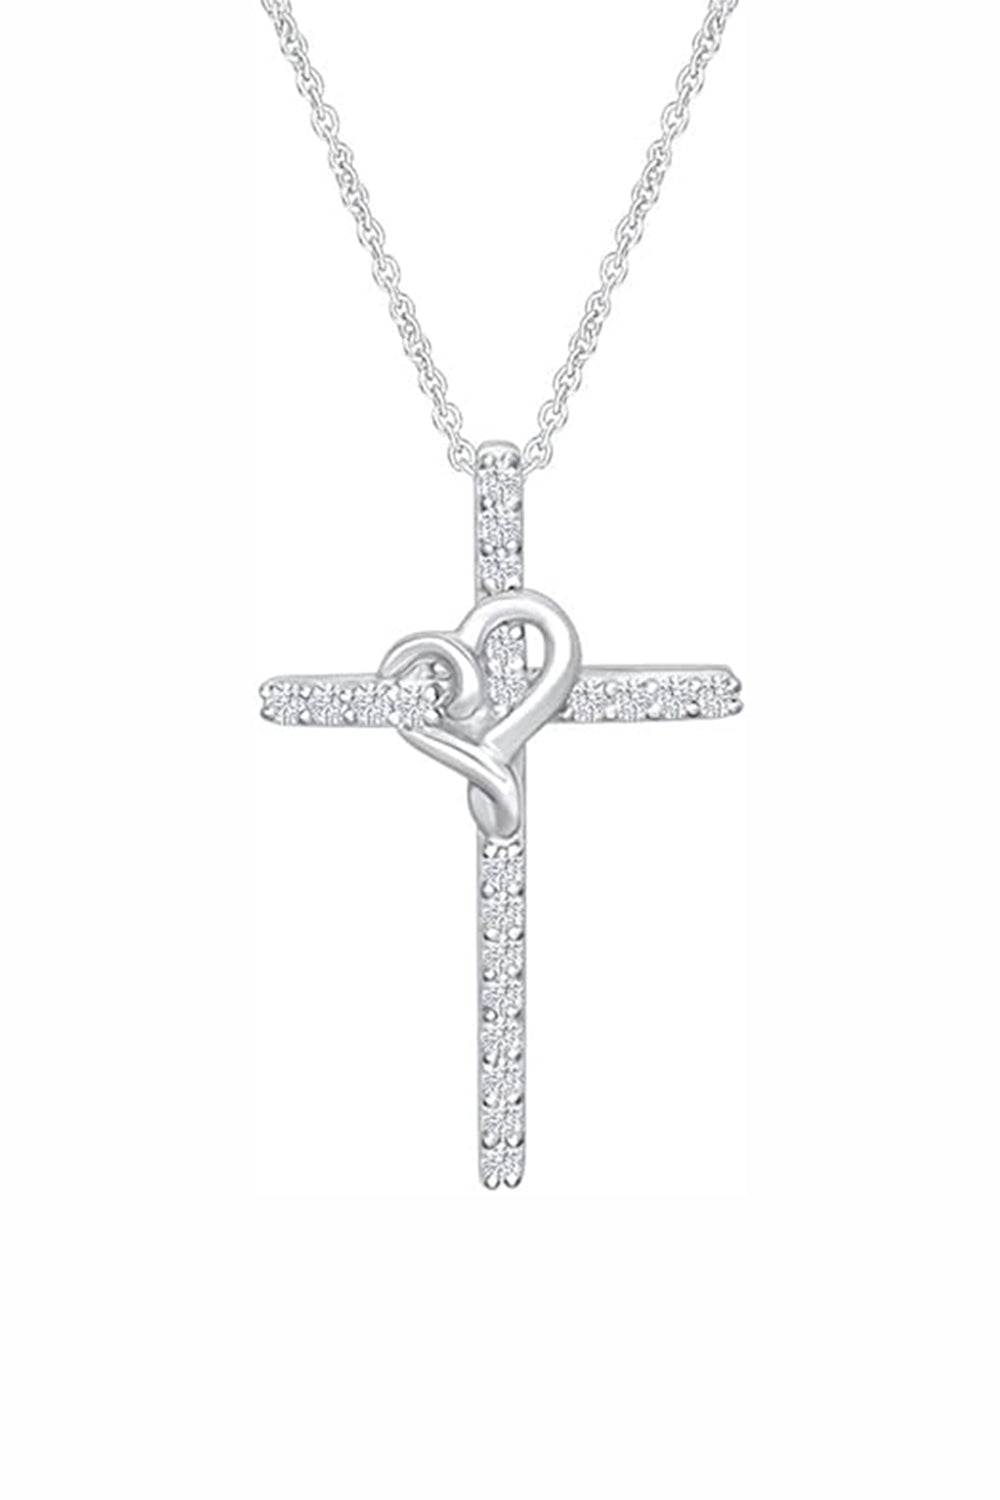 White Gold Color Yaathi Heart Cross Pendant Necklace, Religious Pendant